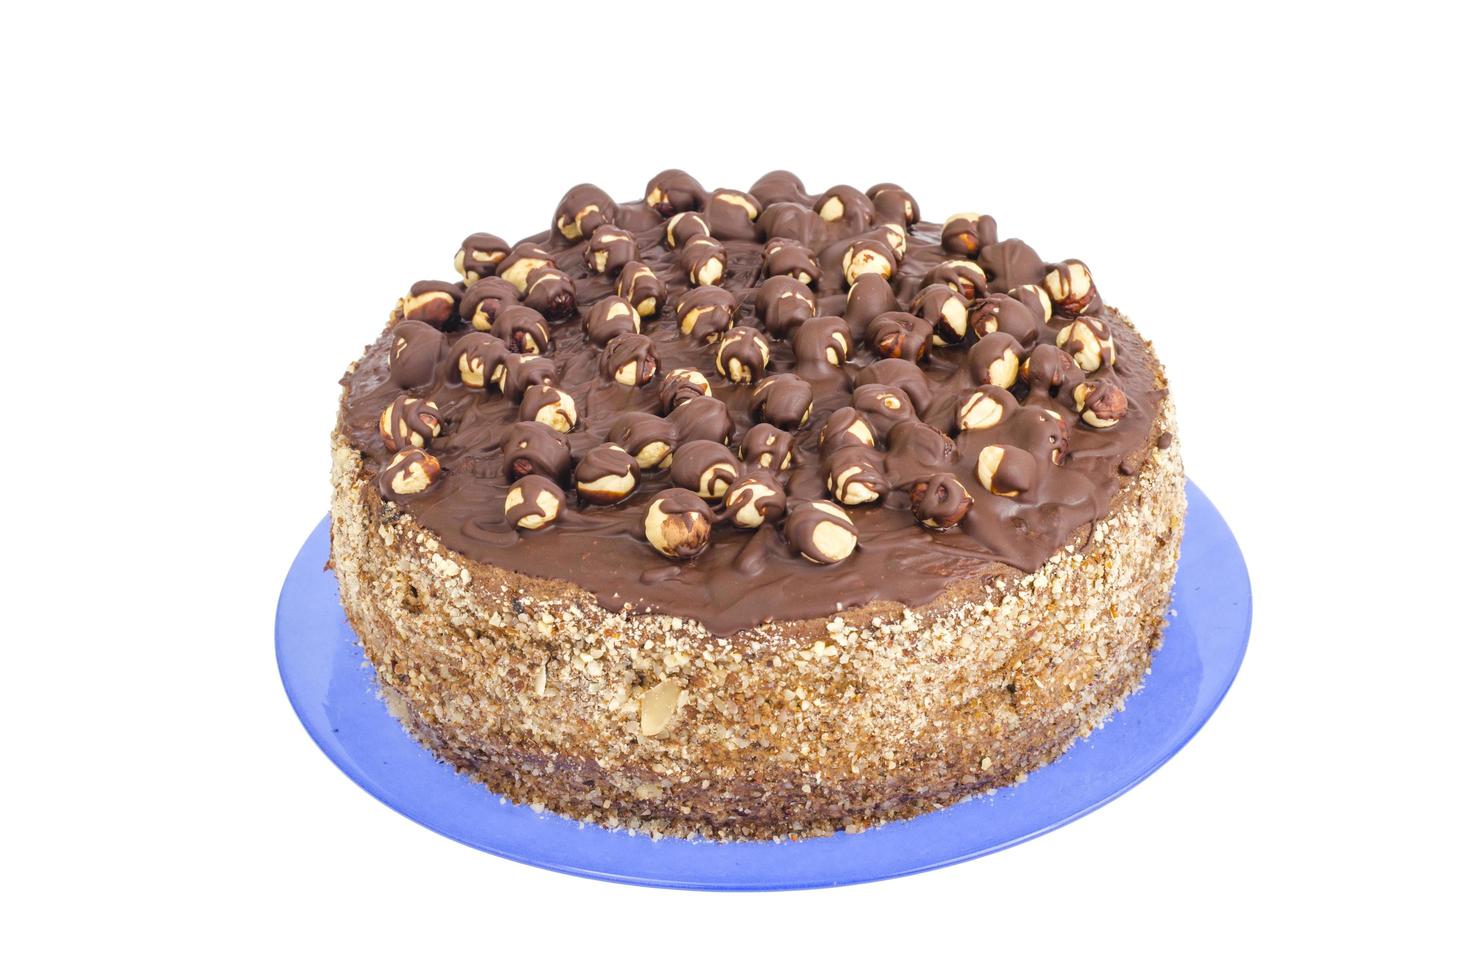 Homemade cake with hazelnuts and chocolate. photo